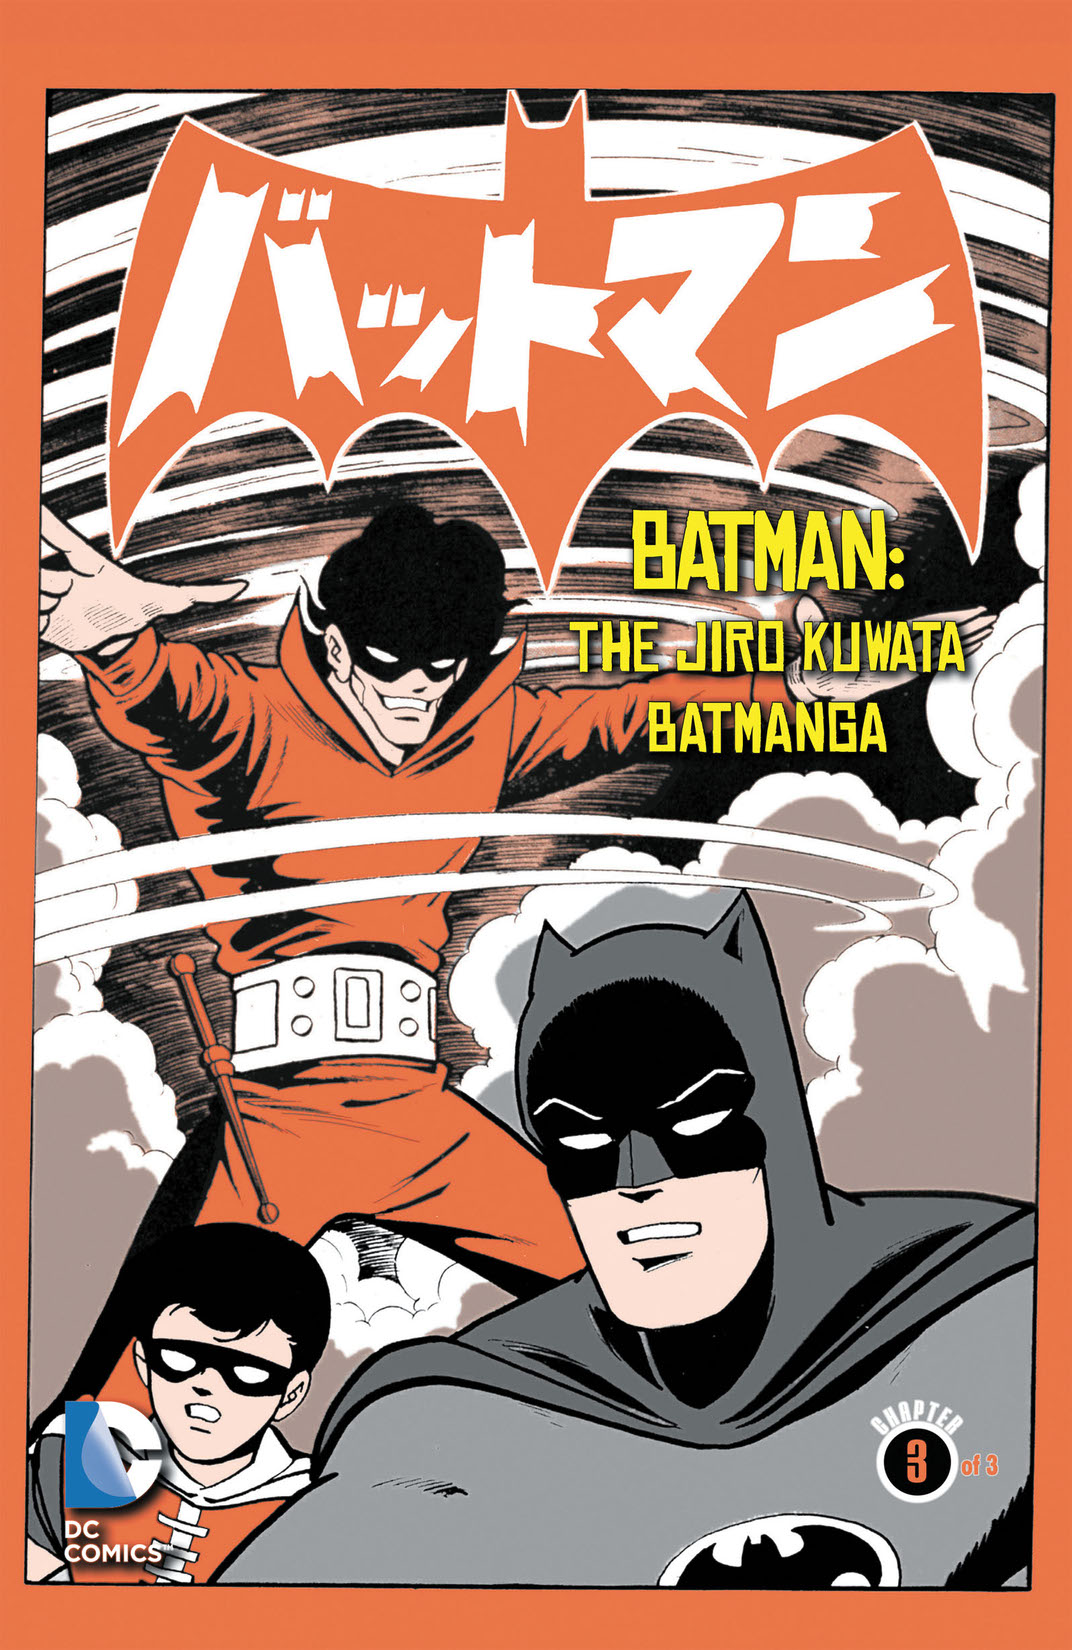 Batman: The Jiro Kuwata Batmanga #15 preview images